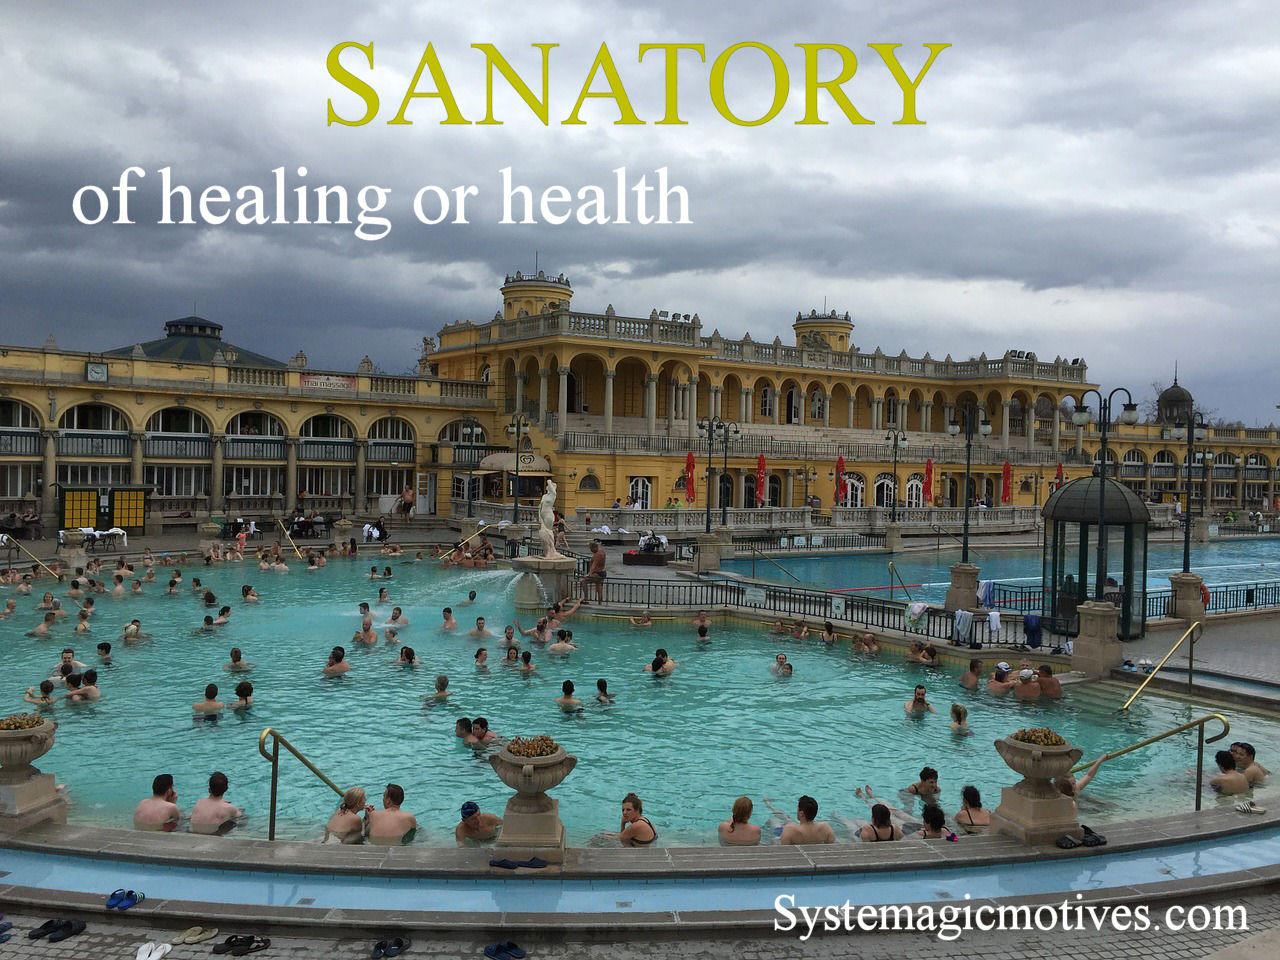 Graphic Definition of Sanatory